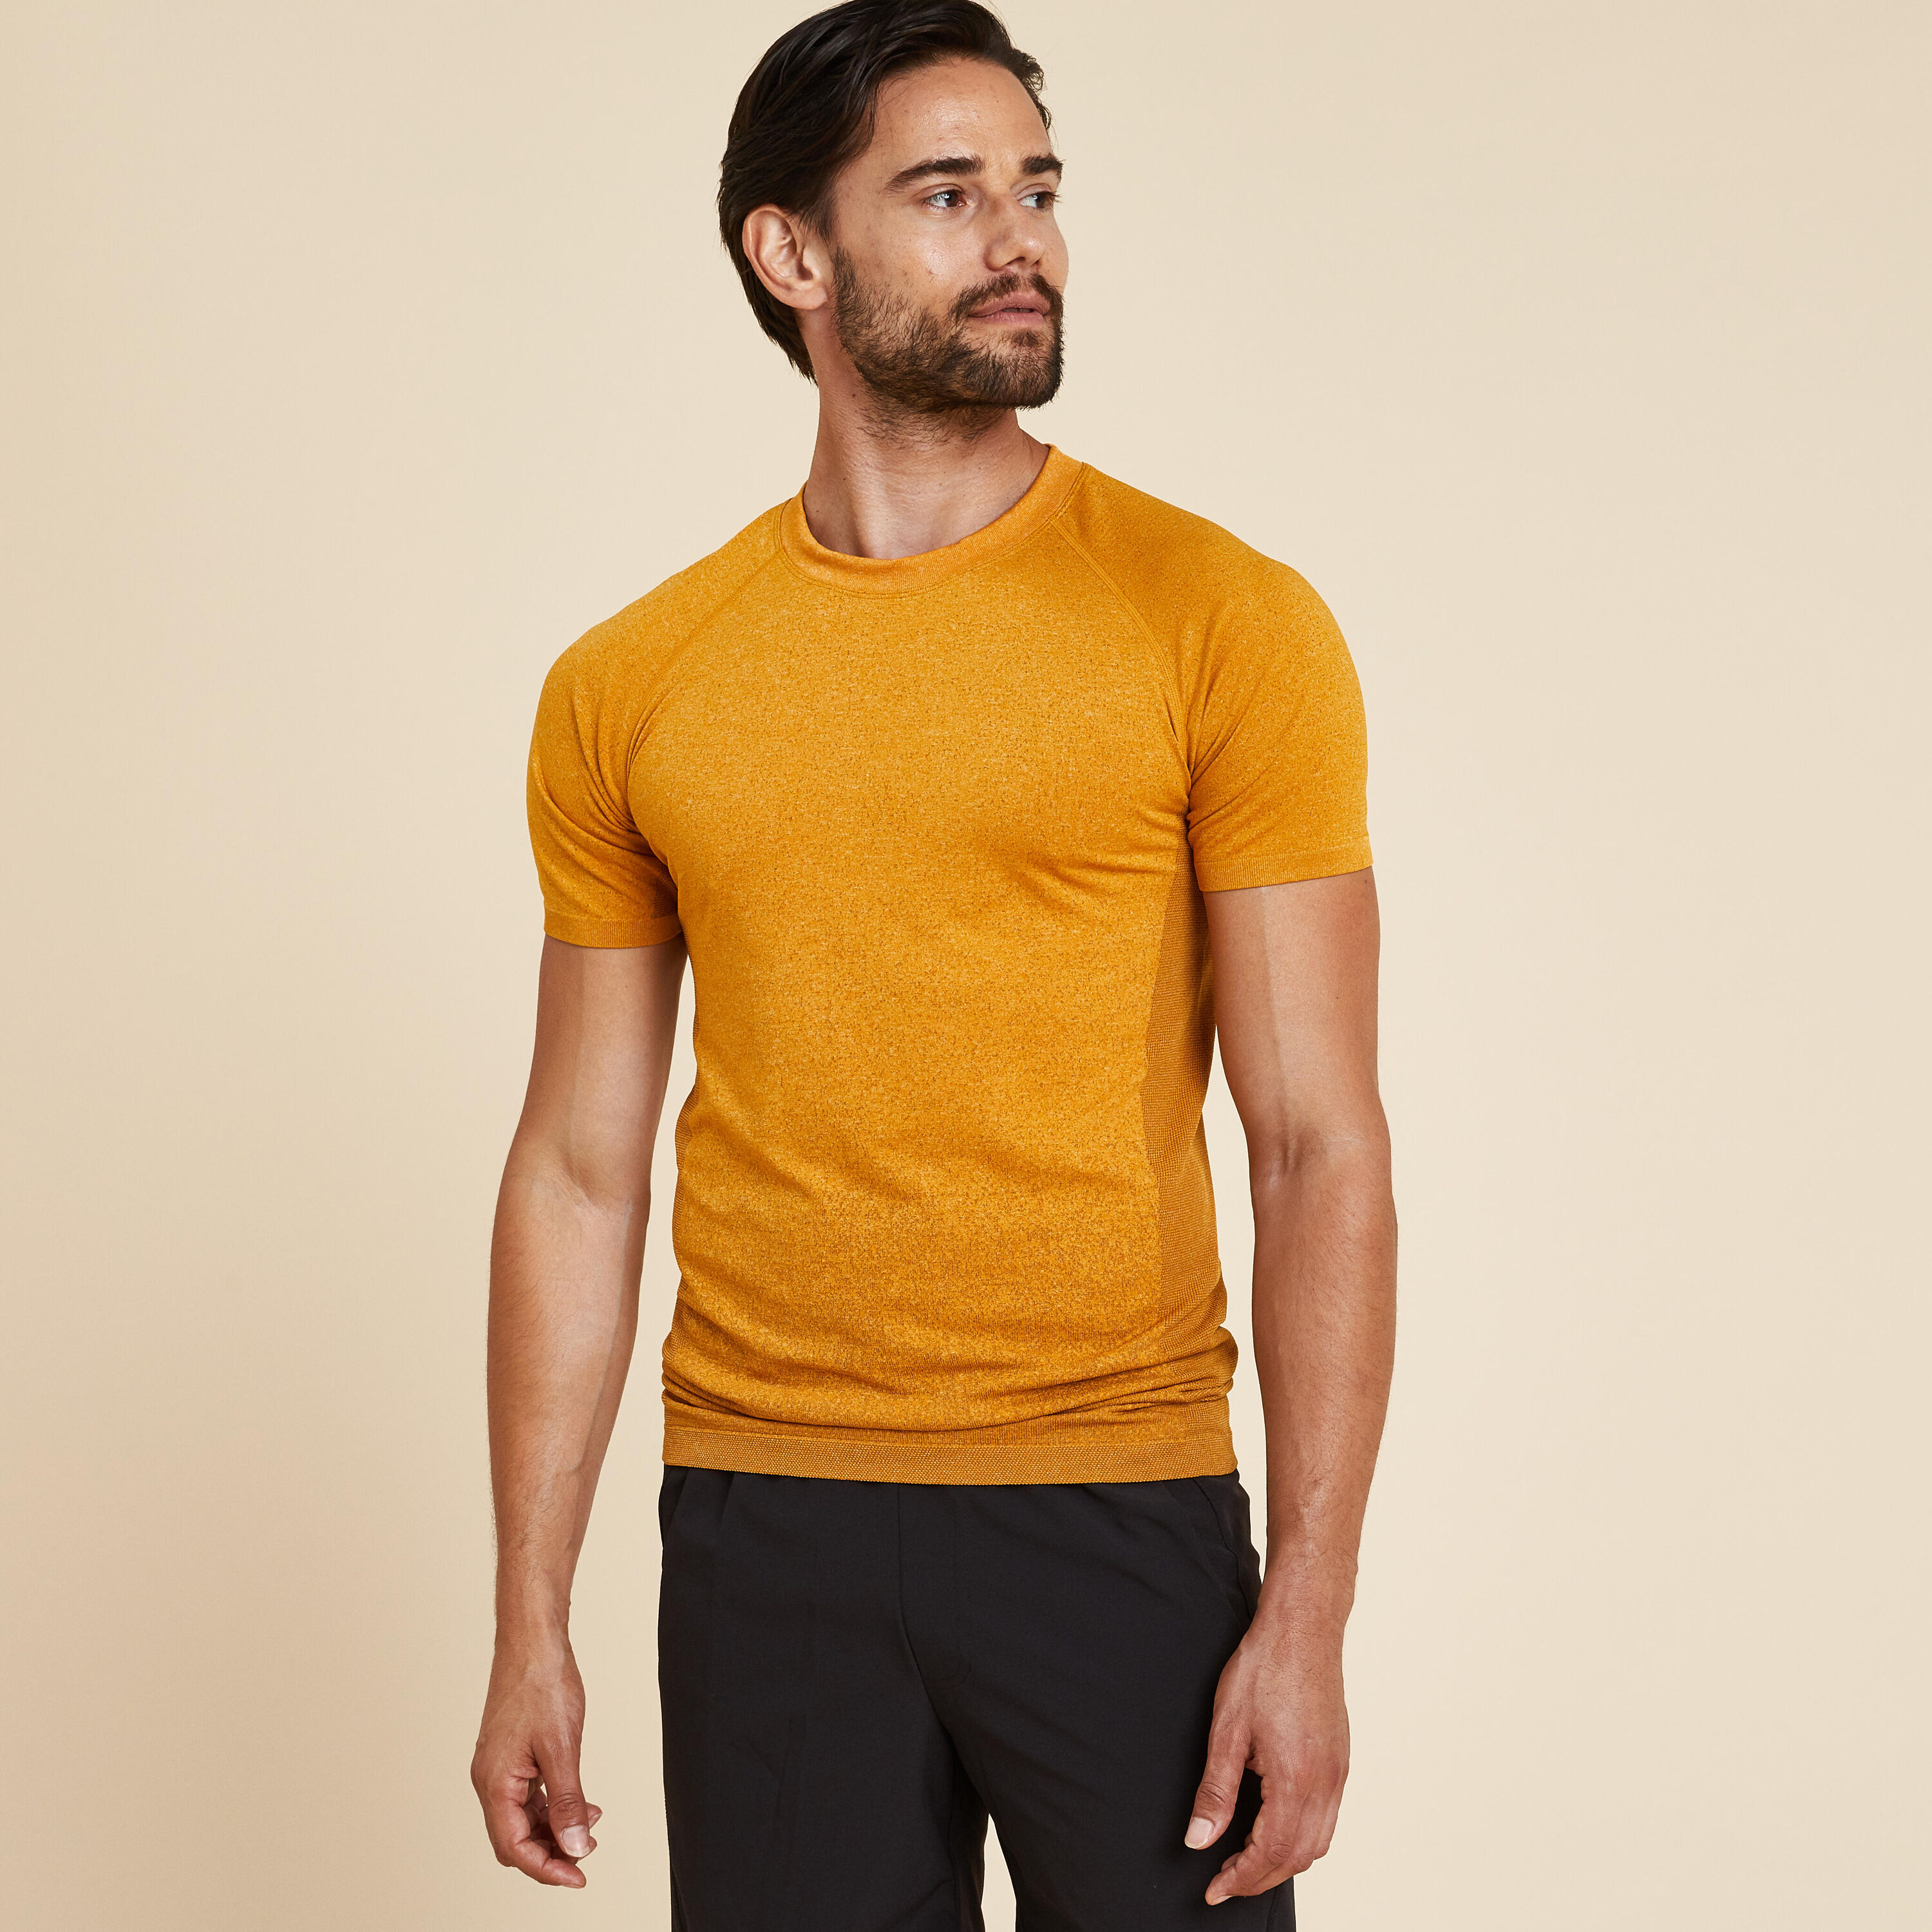 KIMJALY Seamless Short-Sleeved Yoga T-Shirt - Ochre